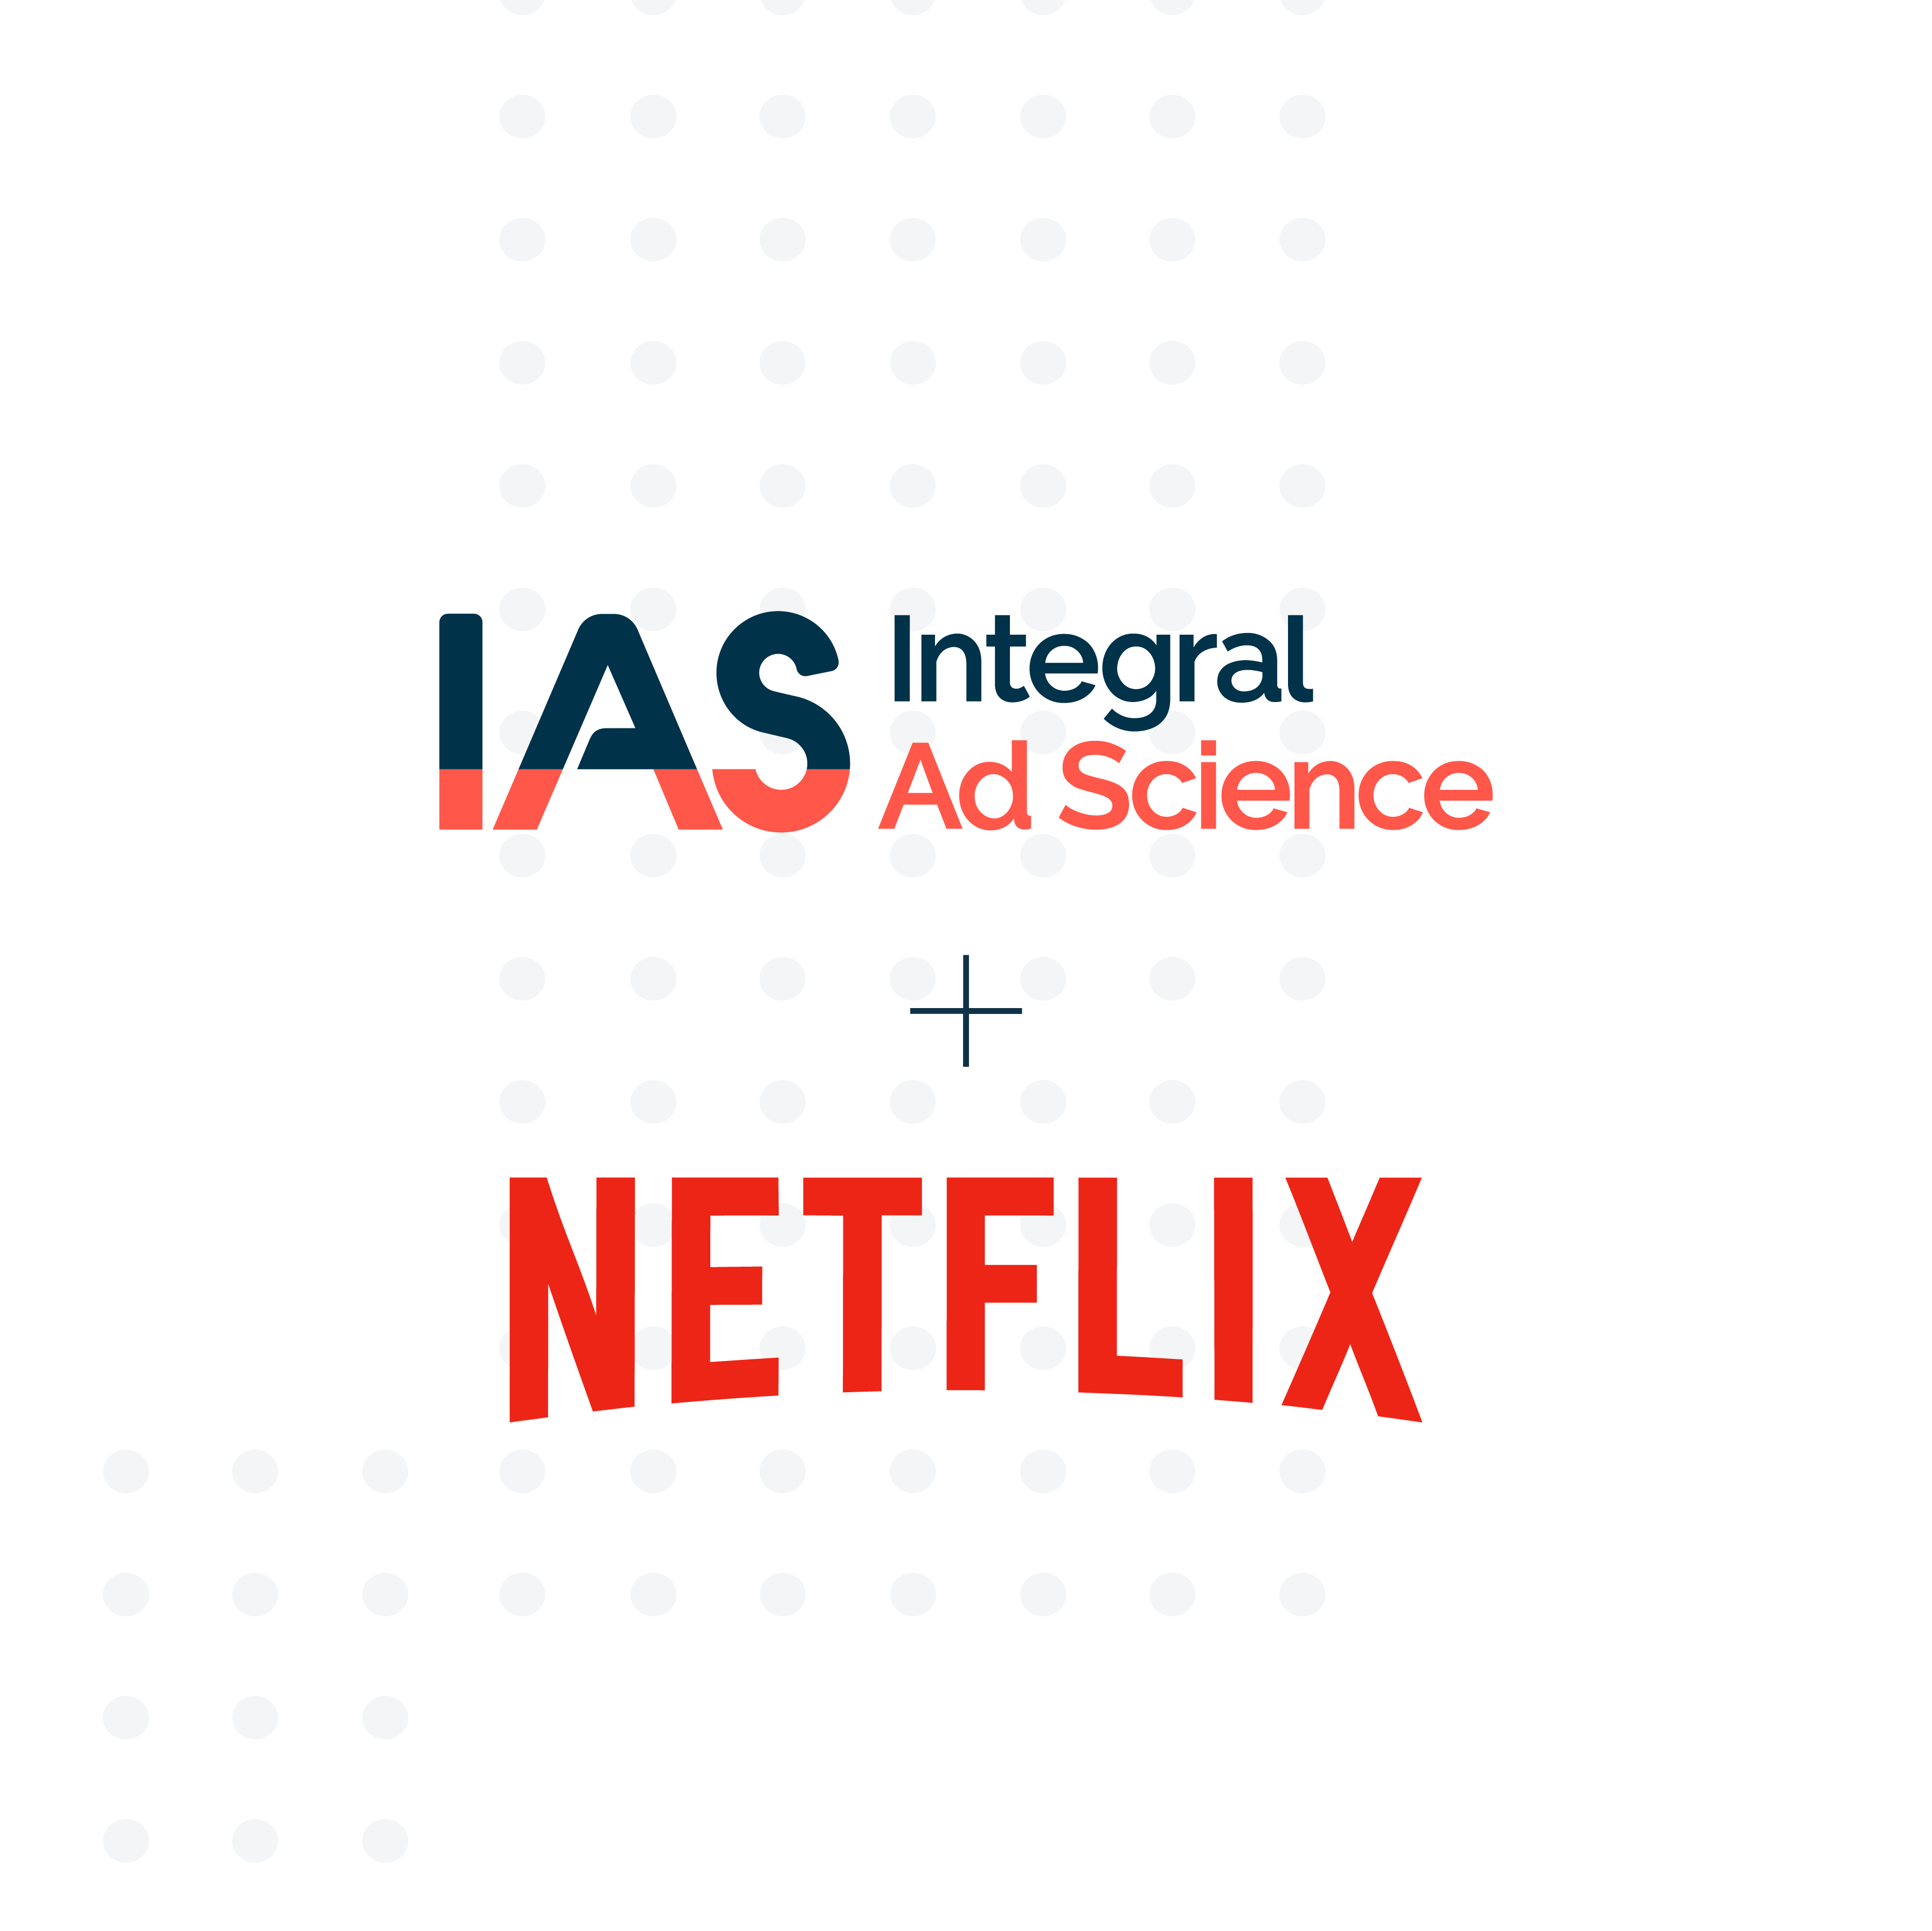 IAS and Netflix logo lockup.